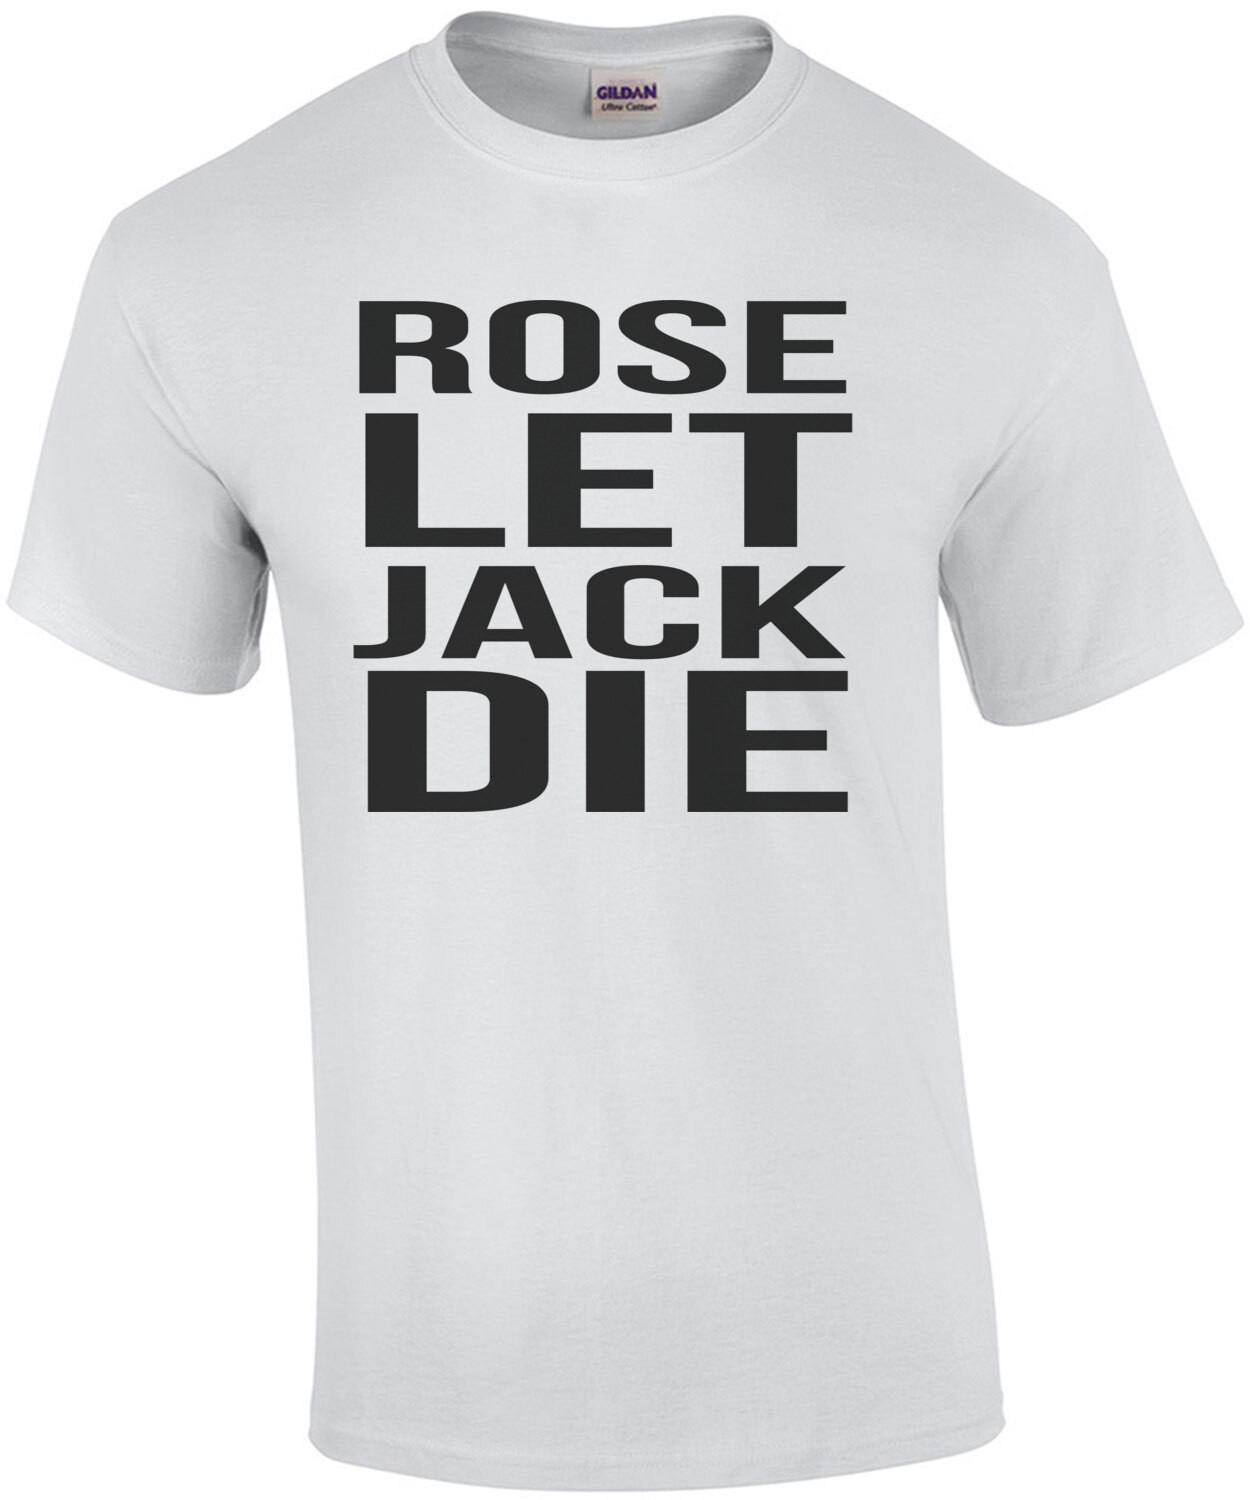 Rose let jack die - Titanic - 90's T-Shirt